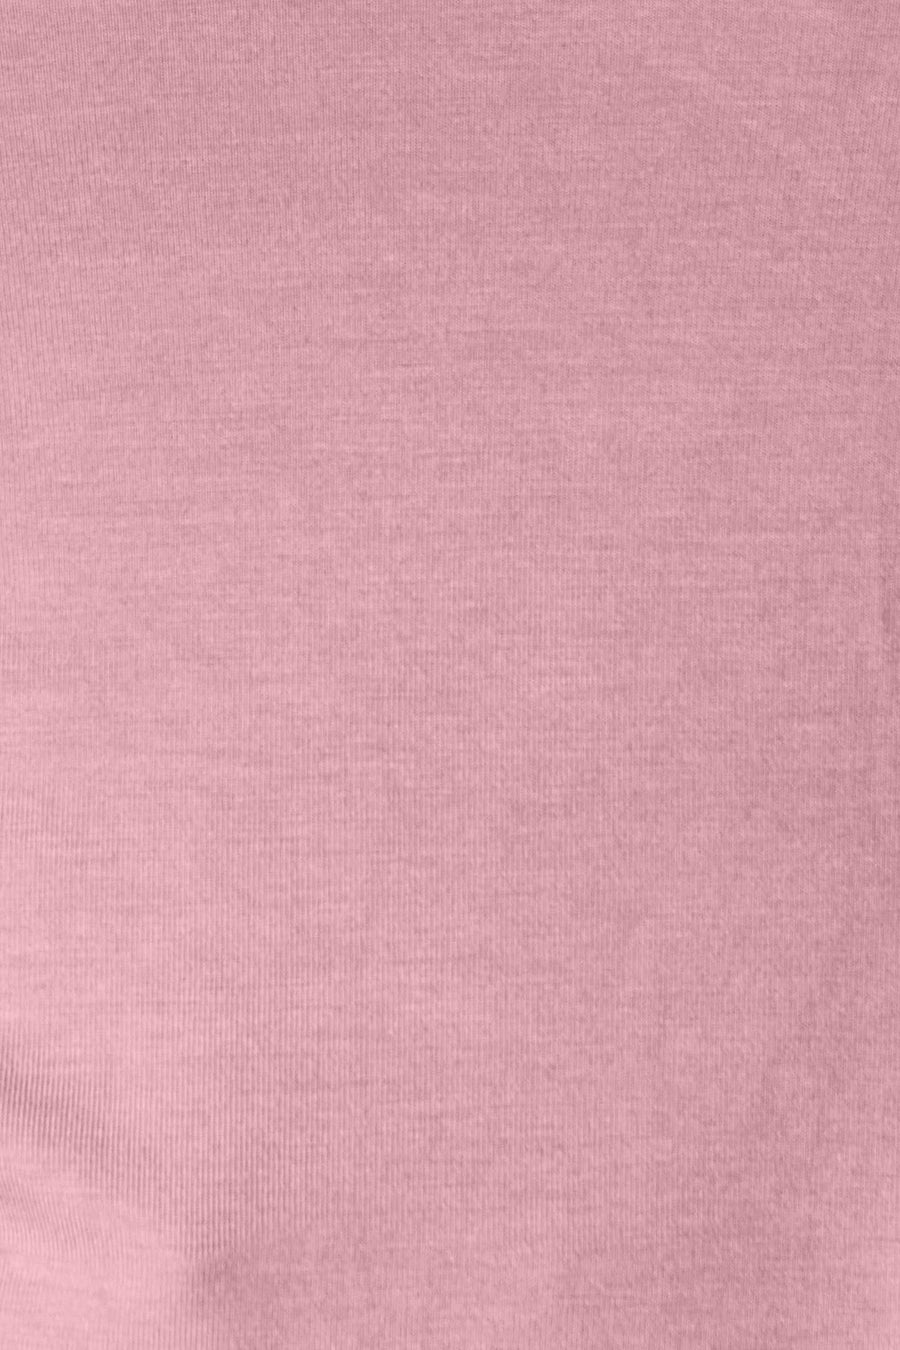 Basic Bae Round Neck Short Sleeve T-Shirt - 6 Colors! (S-3XL)